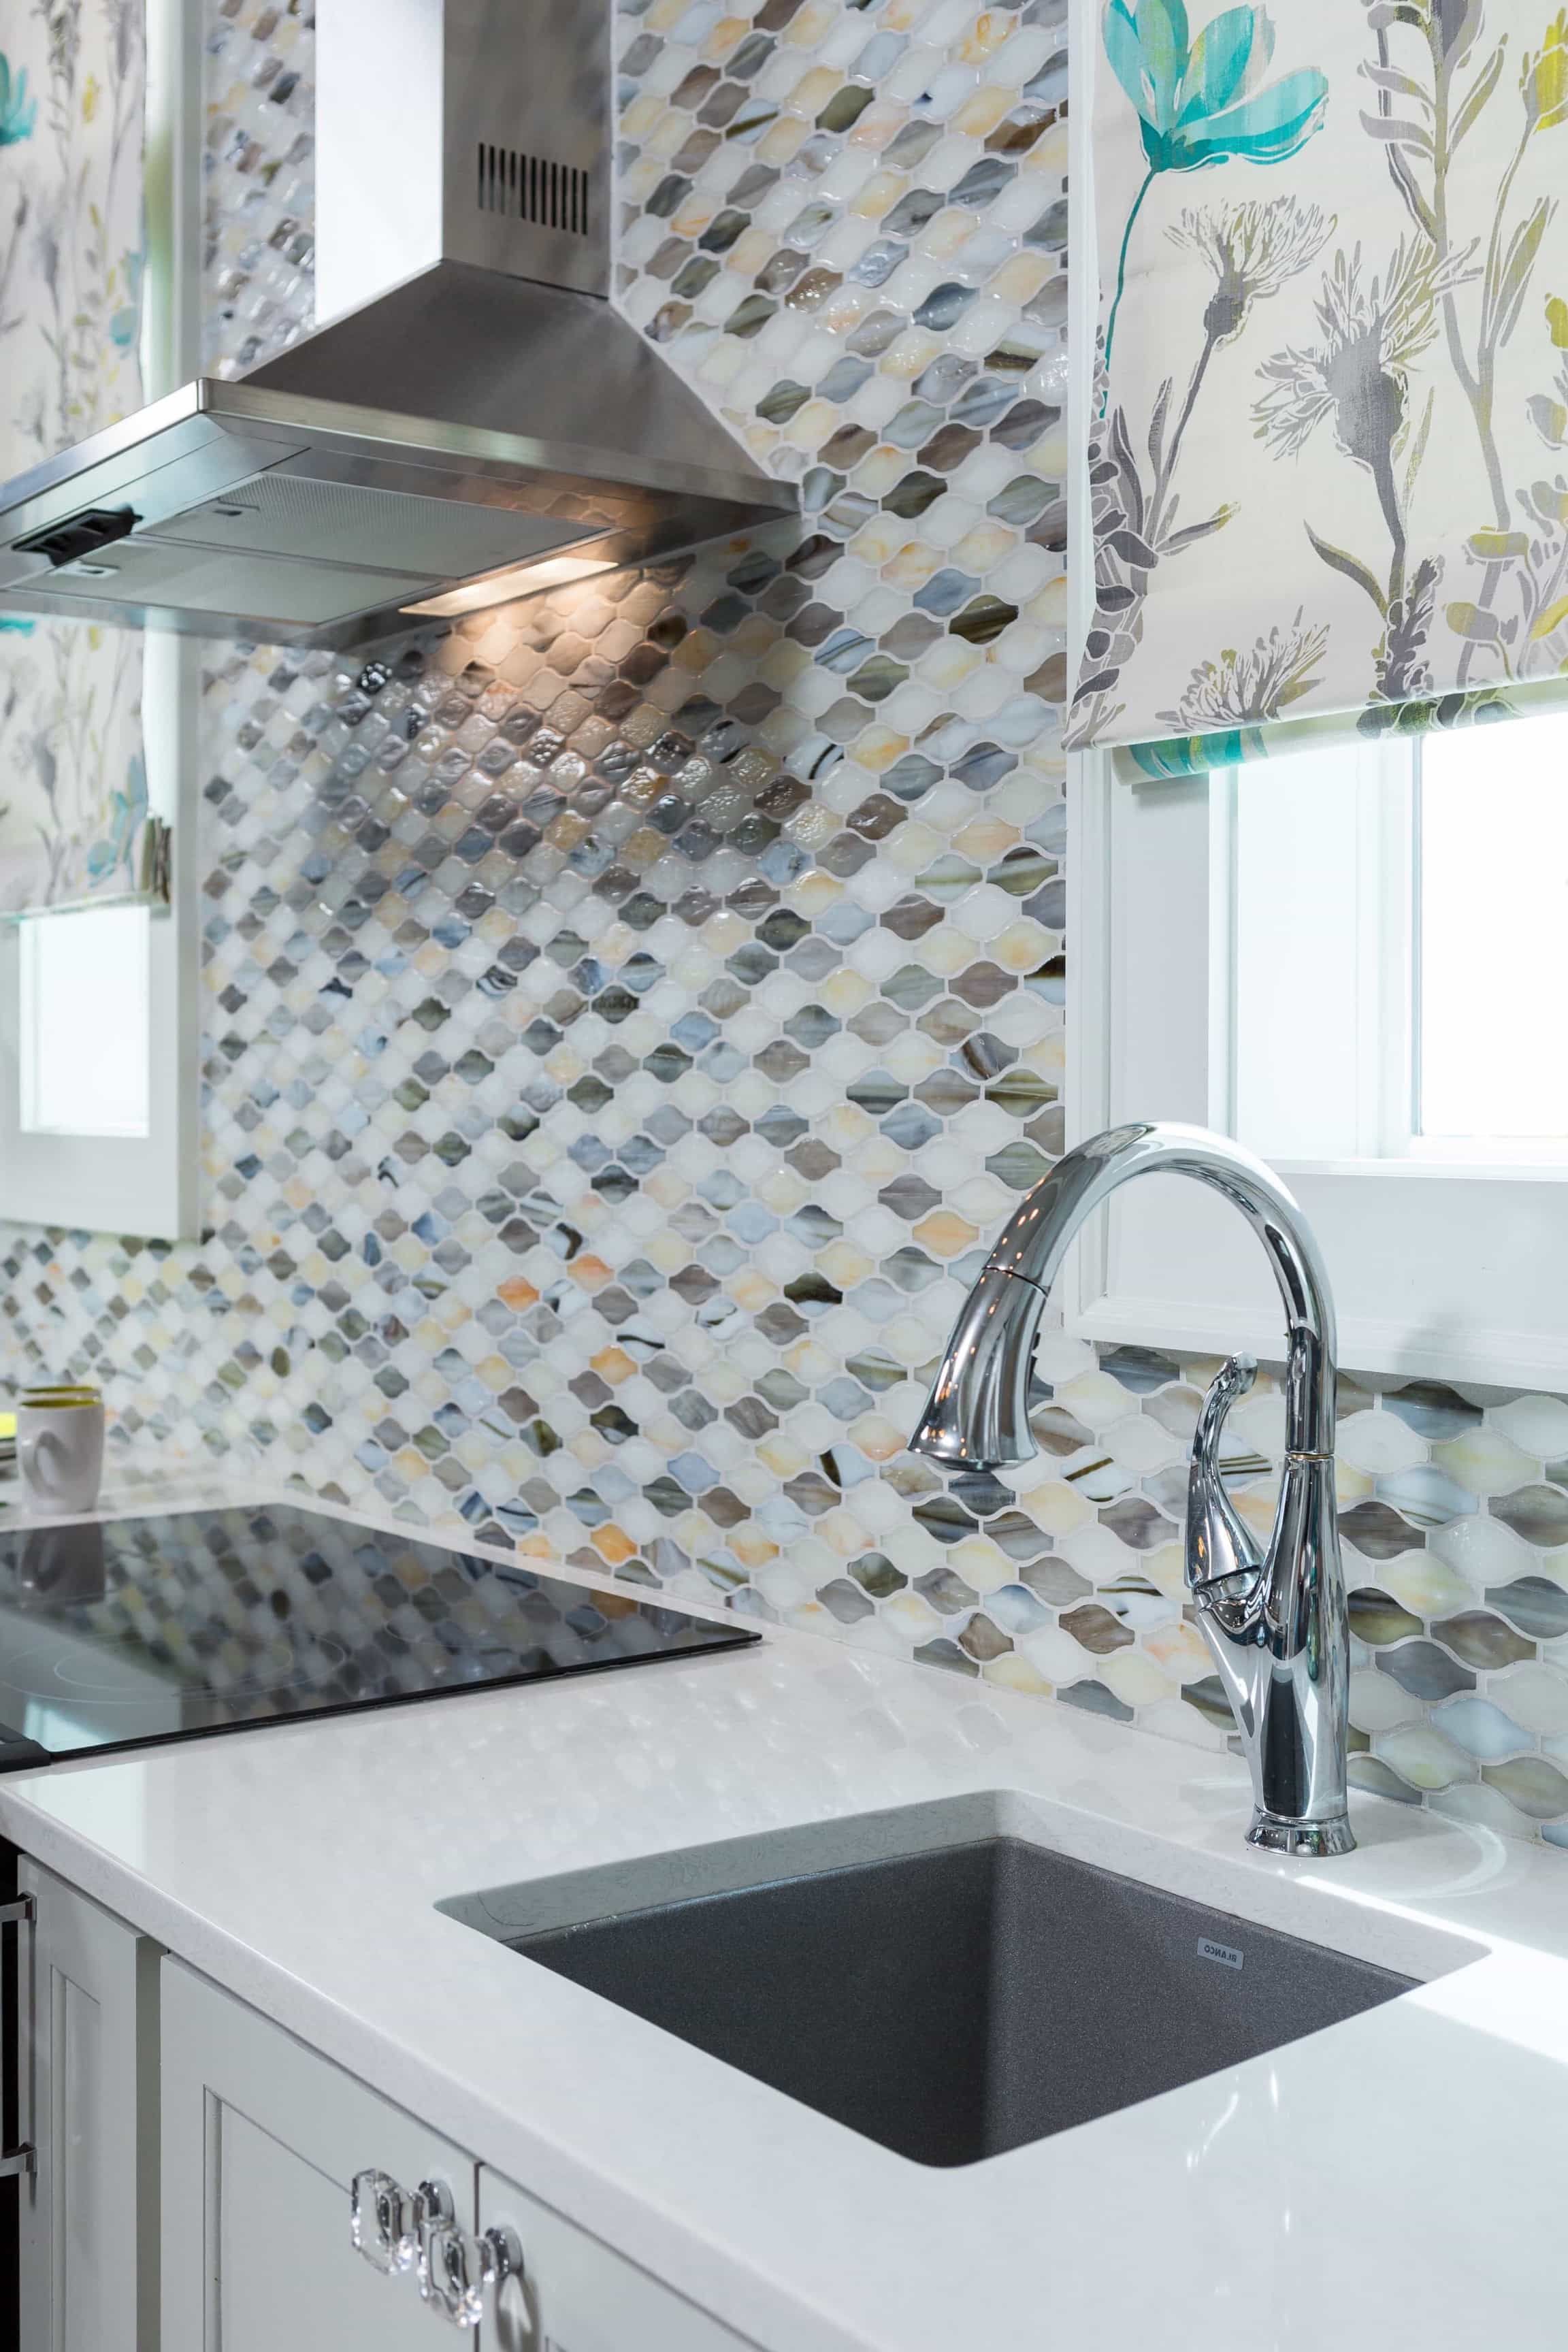 Ideas For Kitchen Backsplash Tiles Image To U